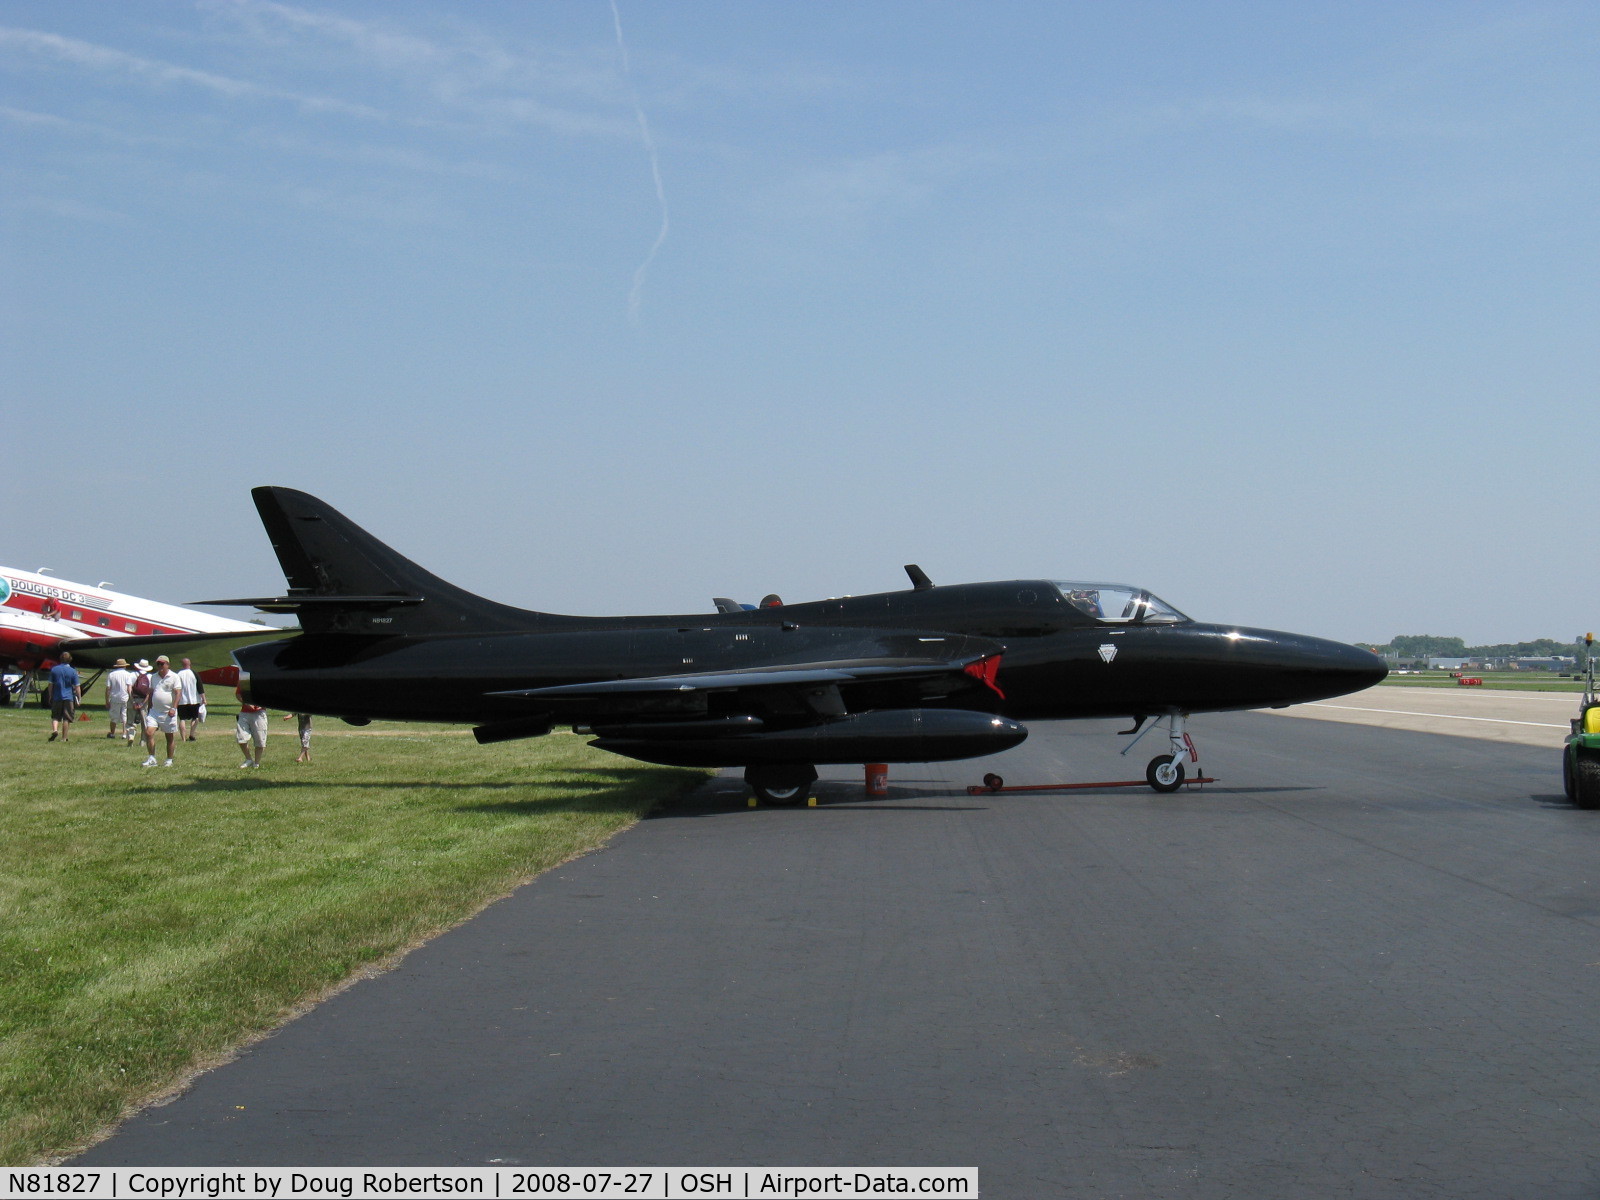 N81827, Hawker Hunter T75A C/N 41H-670829 see comment, Hawker Siddeley HUNTER T75, one Rolls Royce Avon 203 10,050 lb thrust turbojet